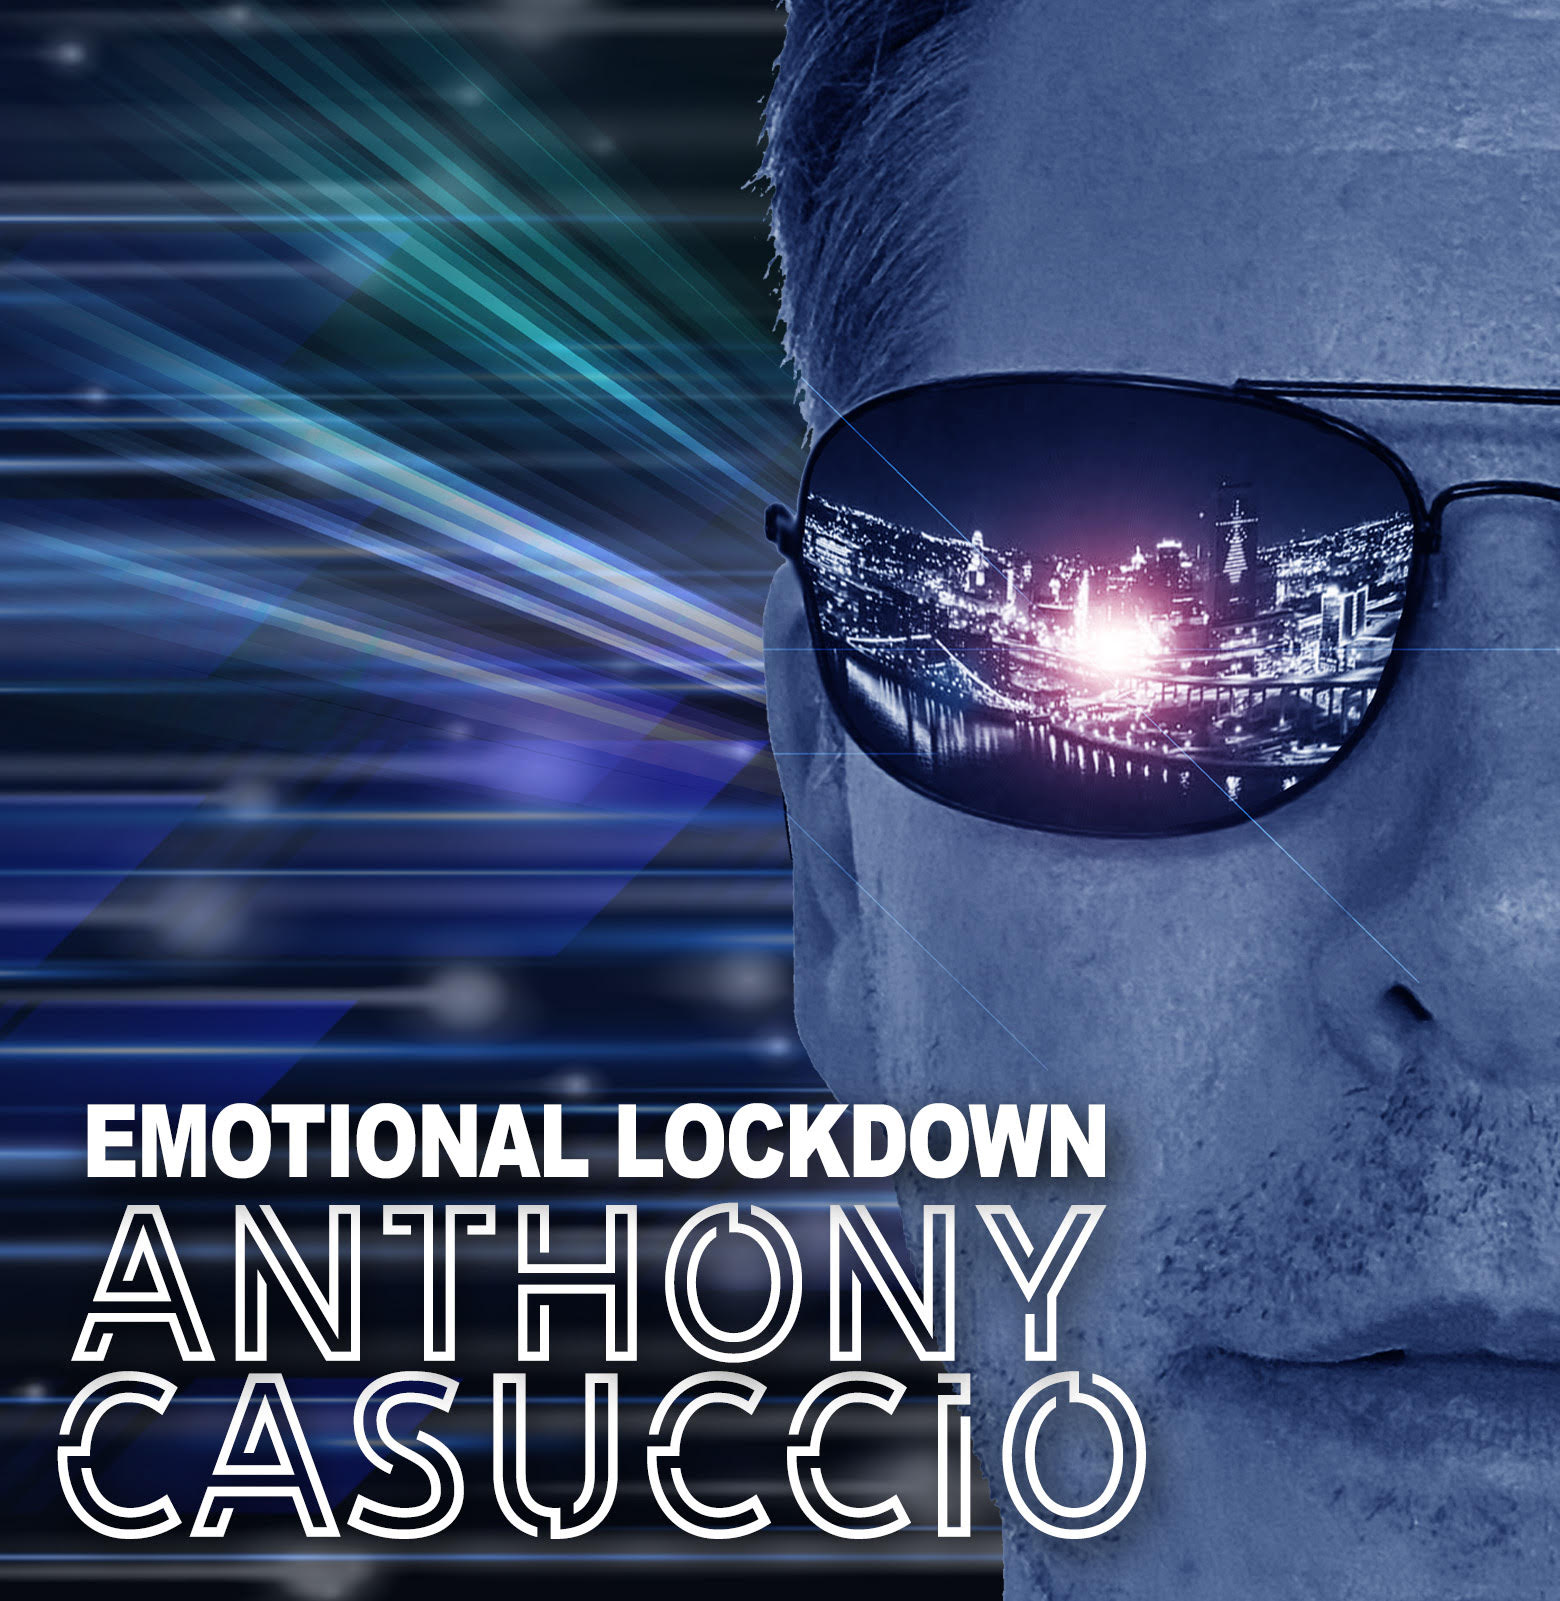 Anthony Cassucio Emotional Lockdown